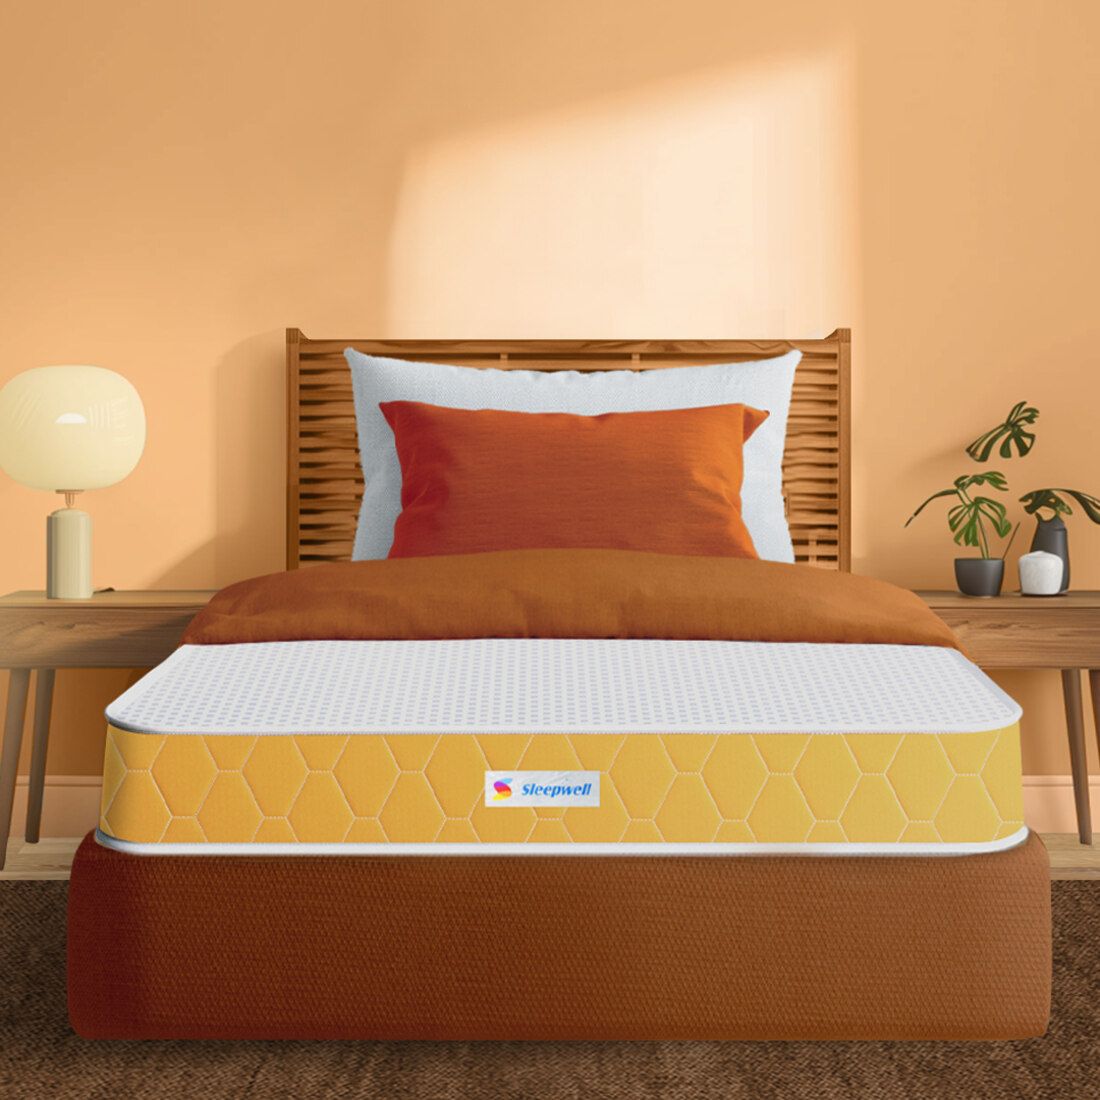 Sleepwell Dual Mattress | Reversible | High Density (HD) Foam | 5-inch Single Bed Size,?Medium Soft & Hard (Orange, 78x42x5 )